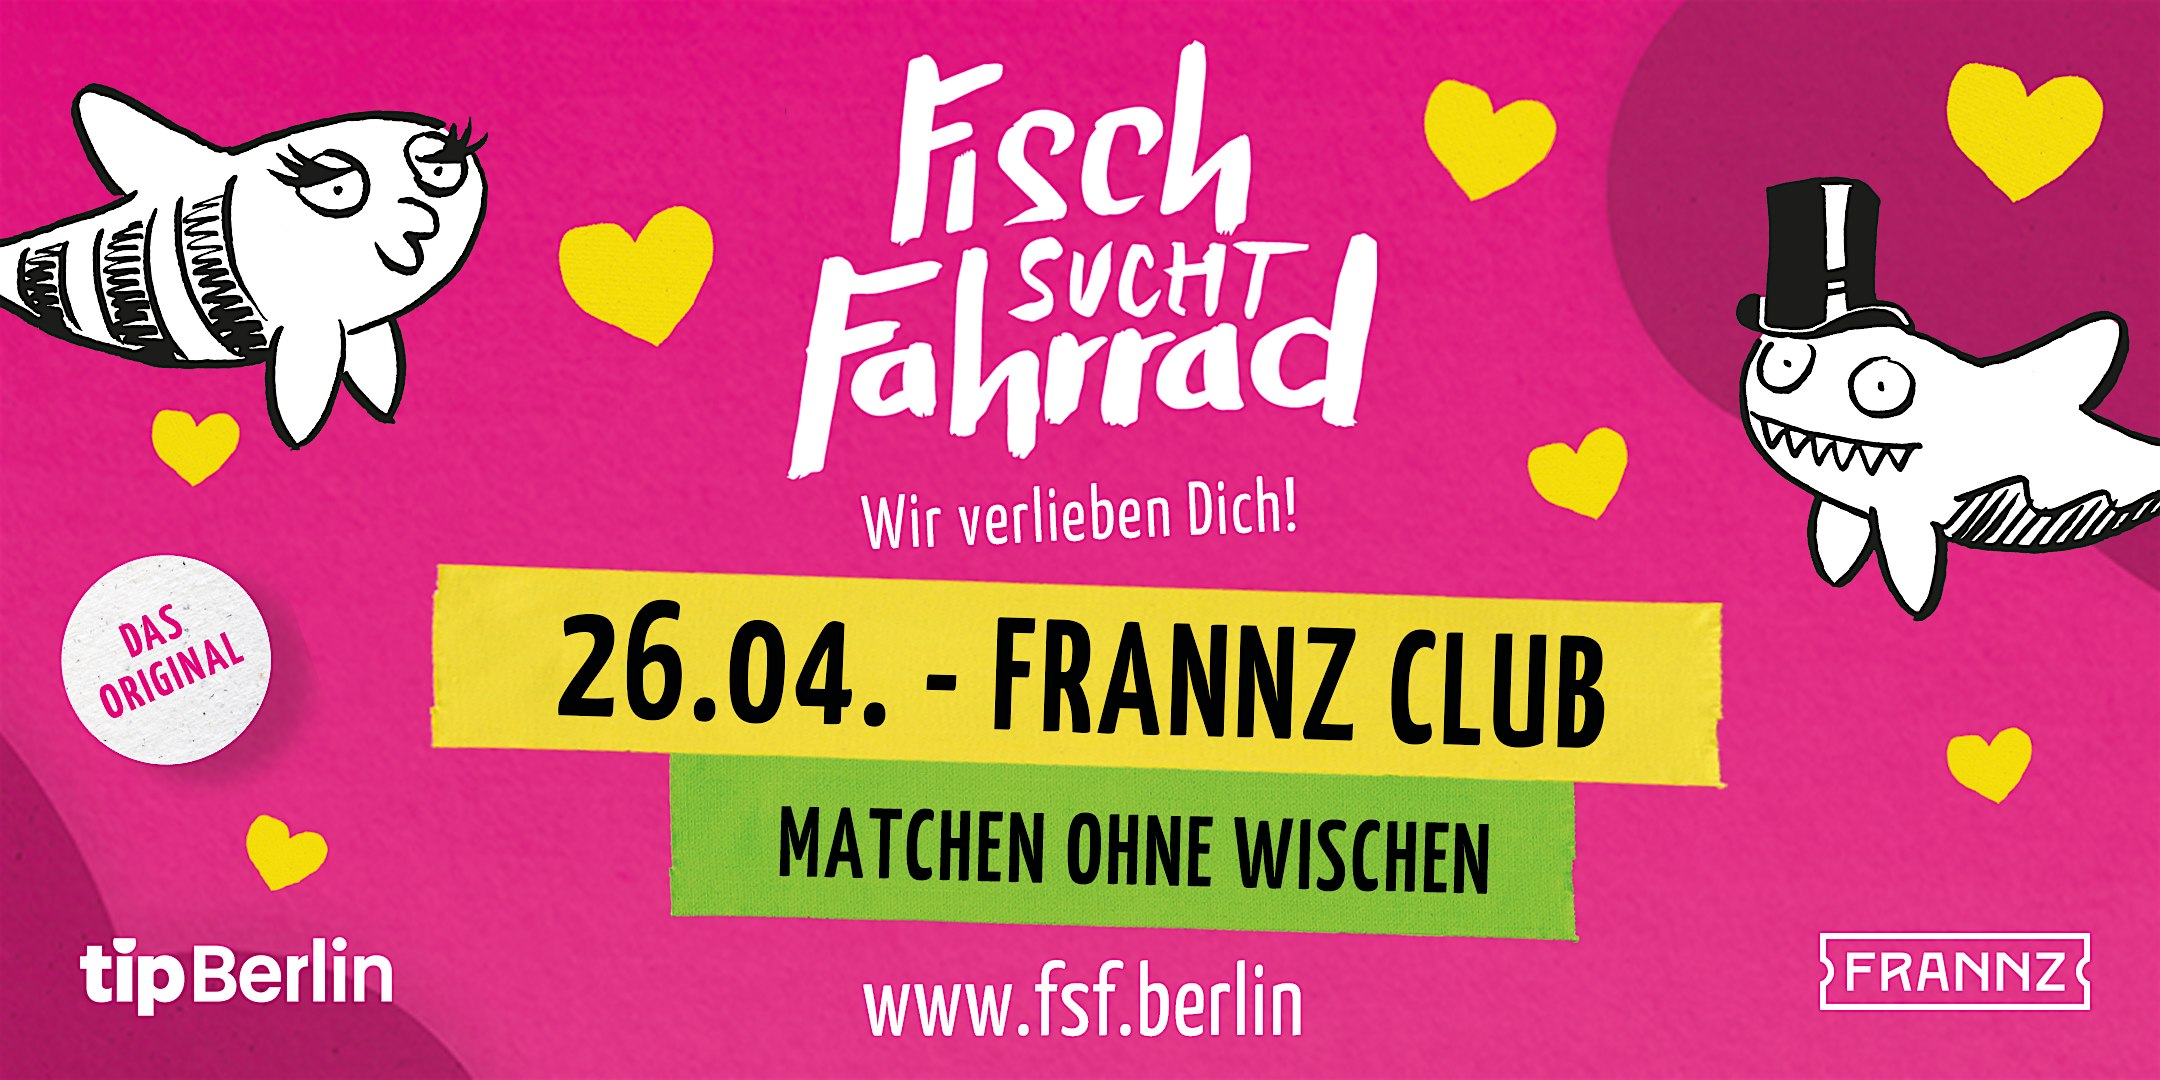 Fisch sucht Fahrrad Berlin | Single Party | 26.04.24